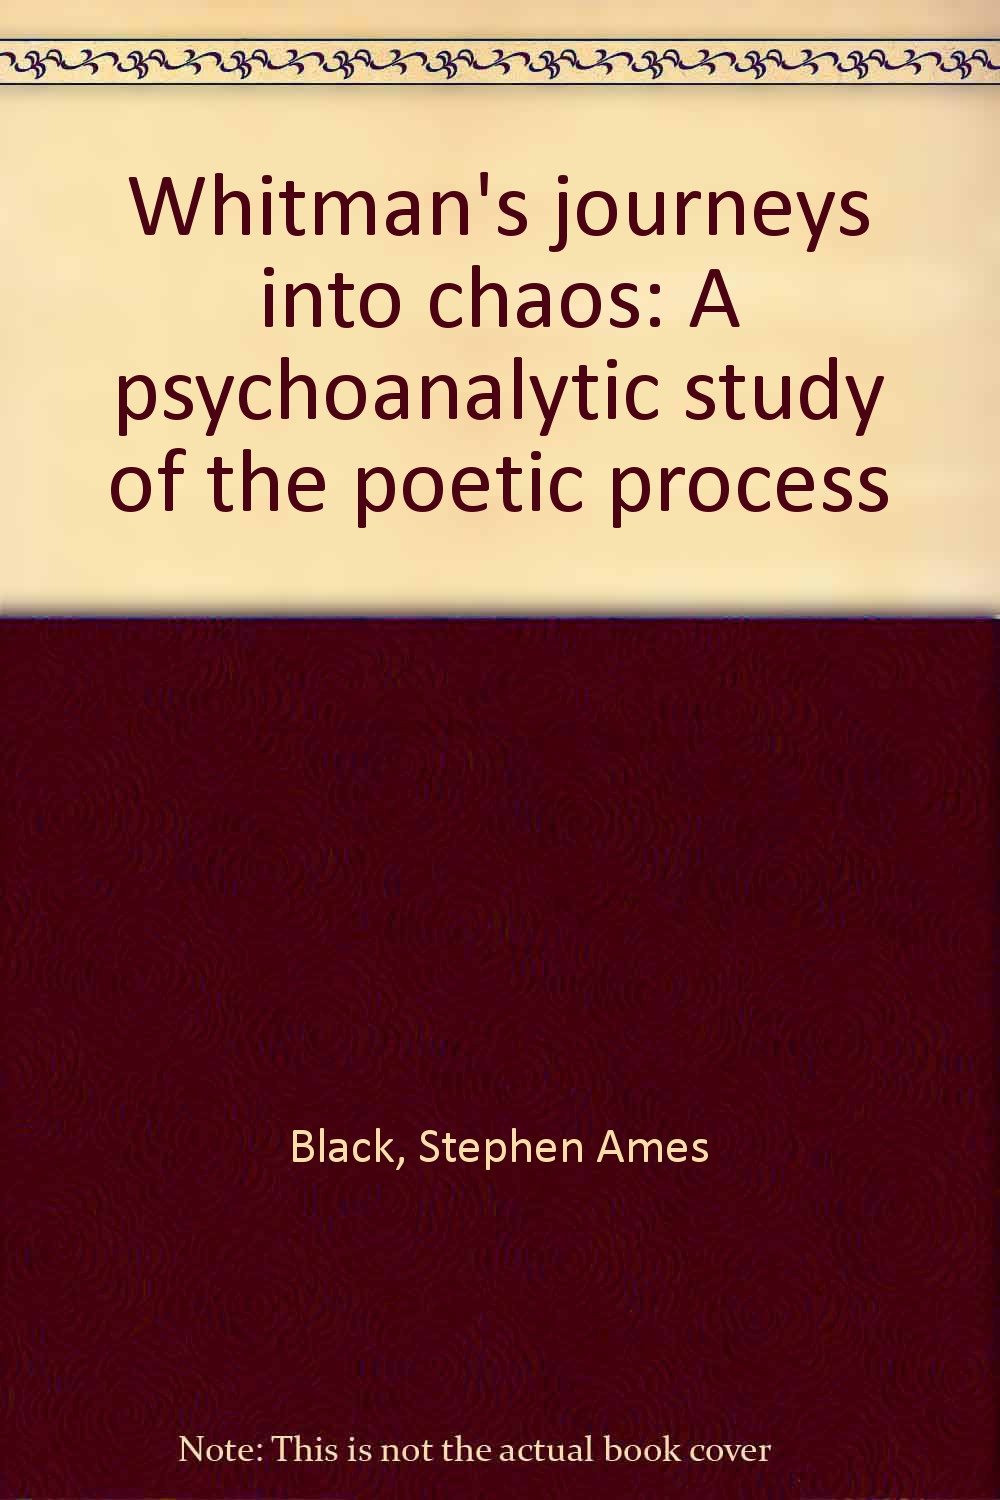 Whitman's journeys into chaos magazine reviews